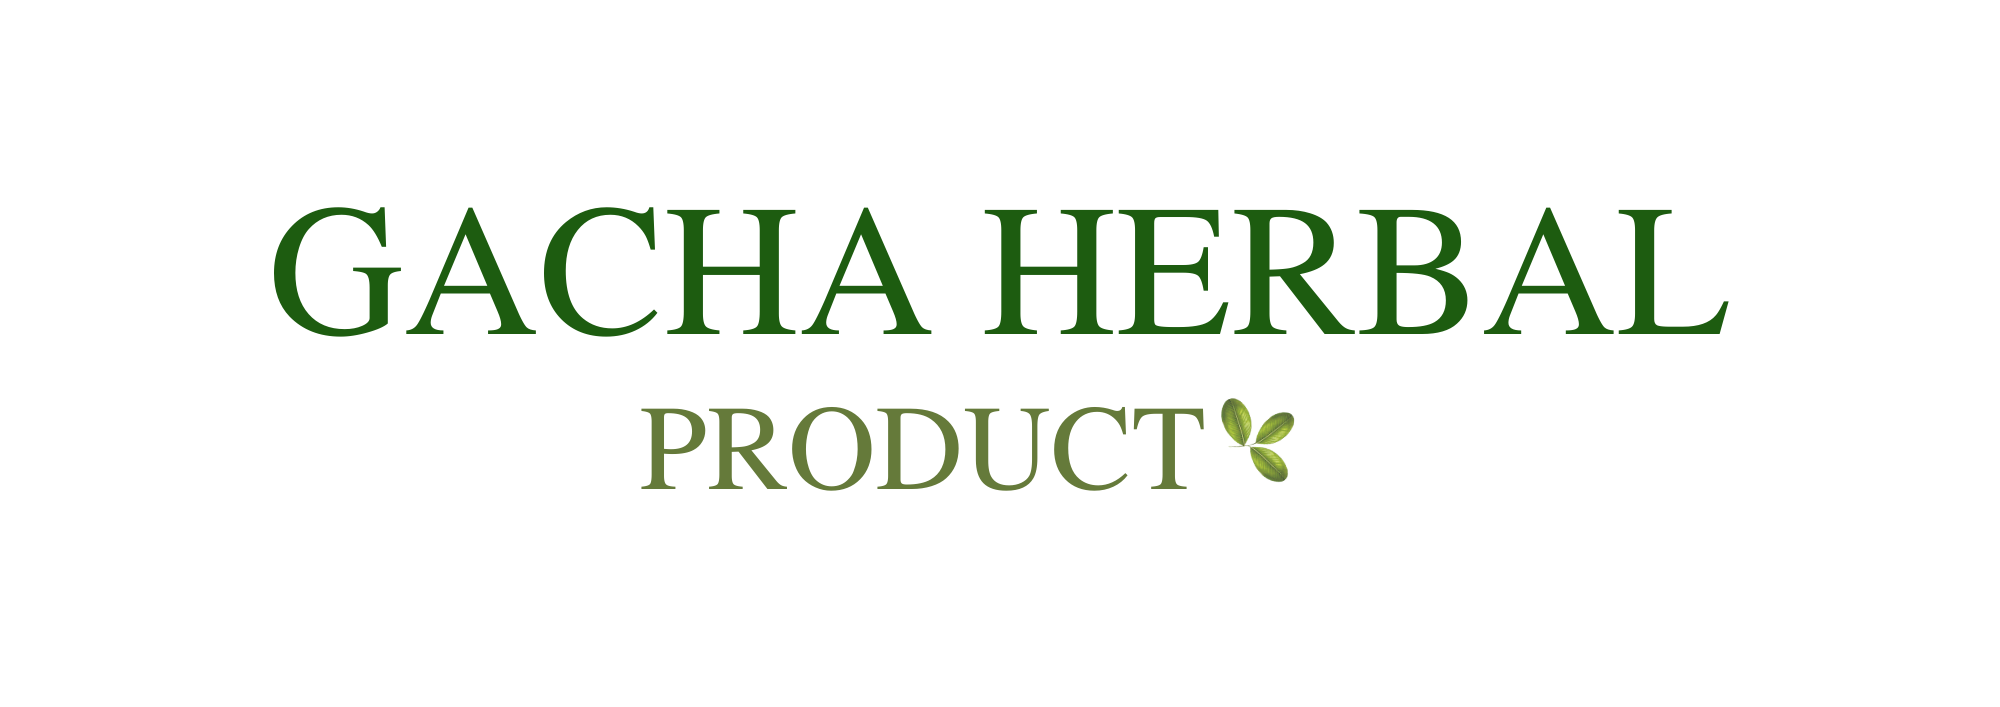 Gacha Herbal Products